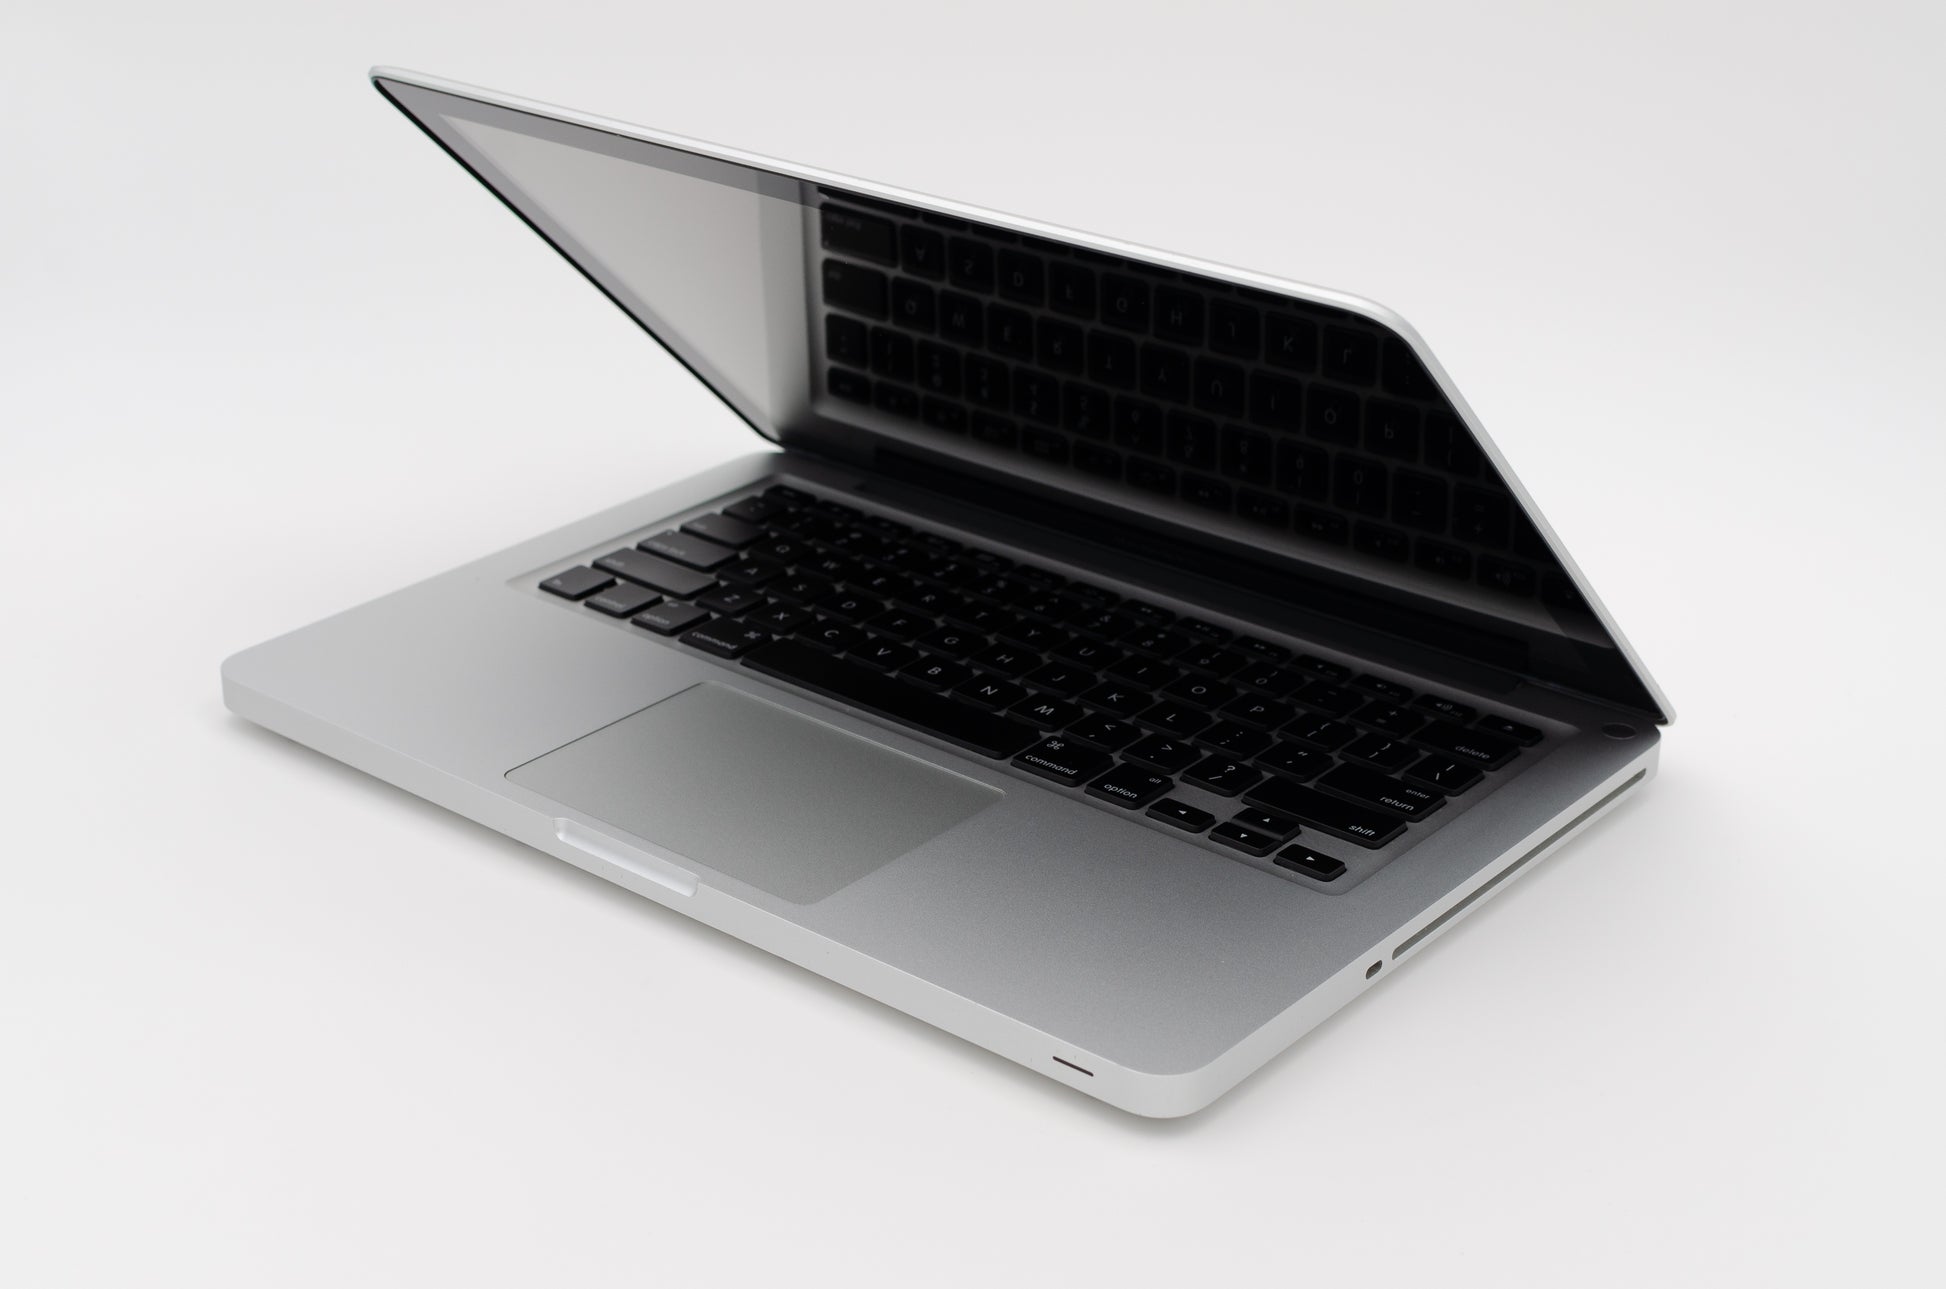 apple-mid-2012-13.3-inch-macbook-pro-a1278-aluminum-dci5 - 2.5ghz processor, 4gb ram, hd 4000 - 512mb gpu-md101ll/a-5